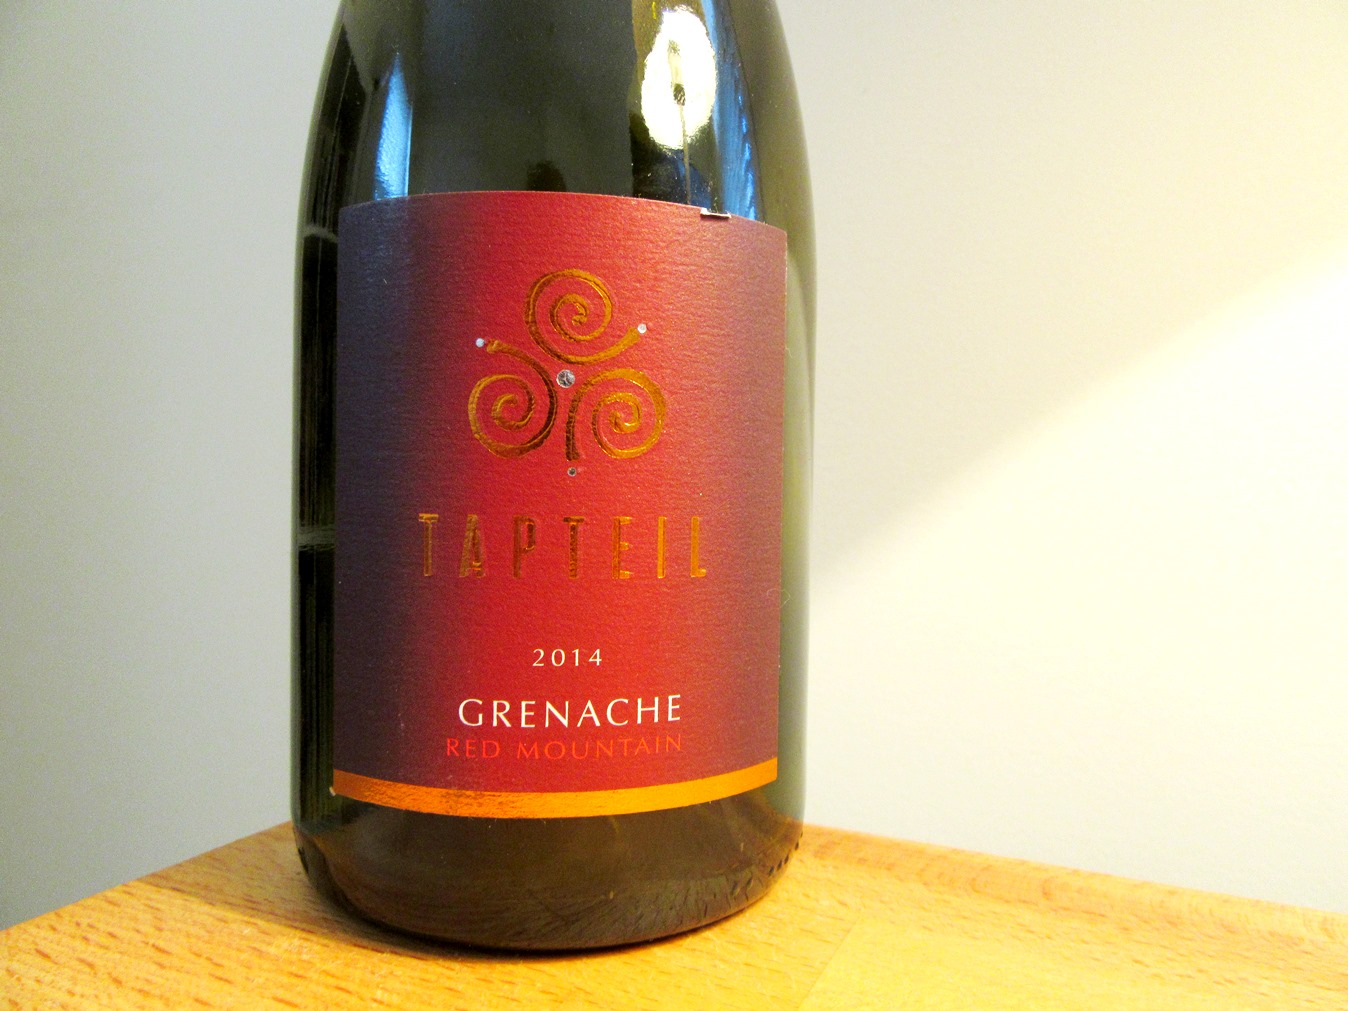 Tapteil, Grenache 2014, Red Mountain, Washington, Wine Casual